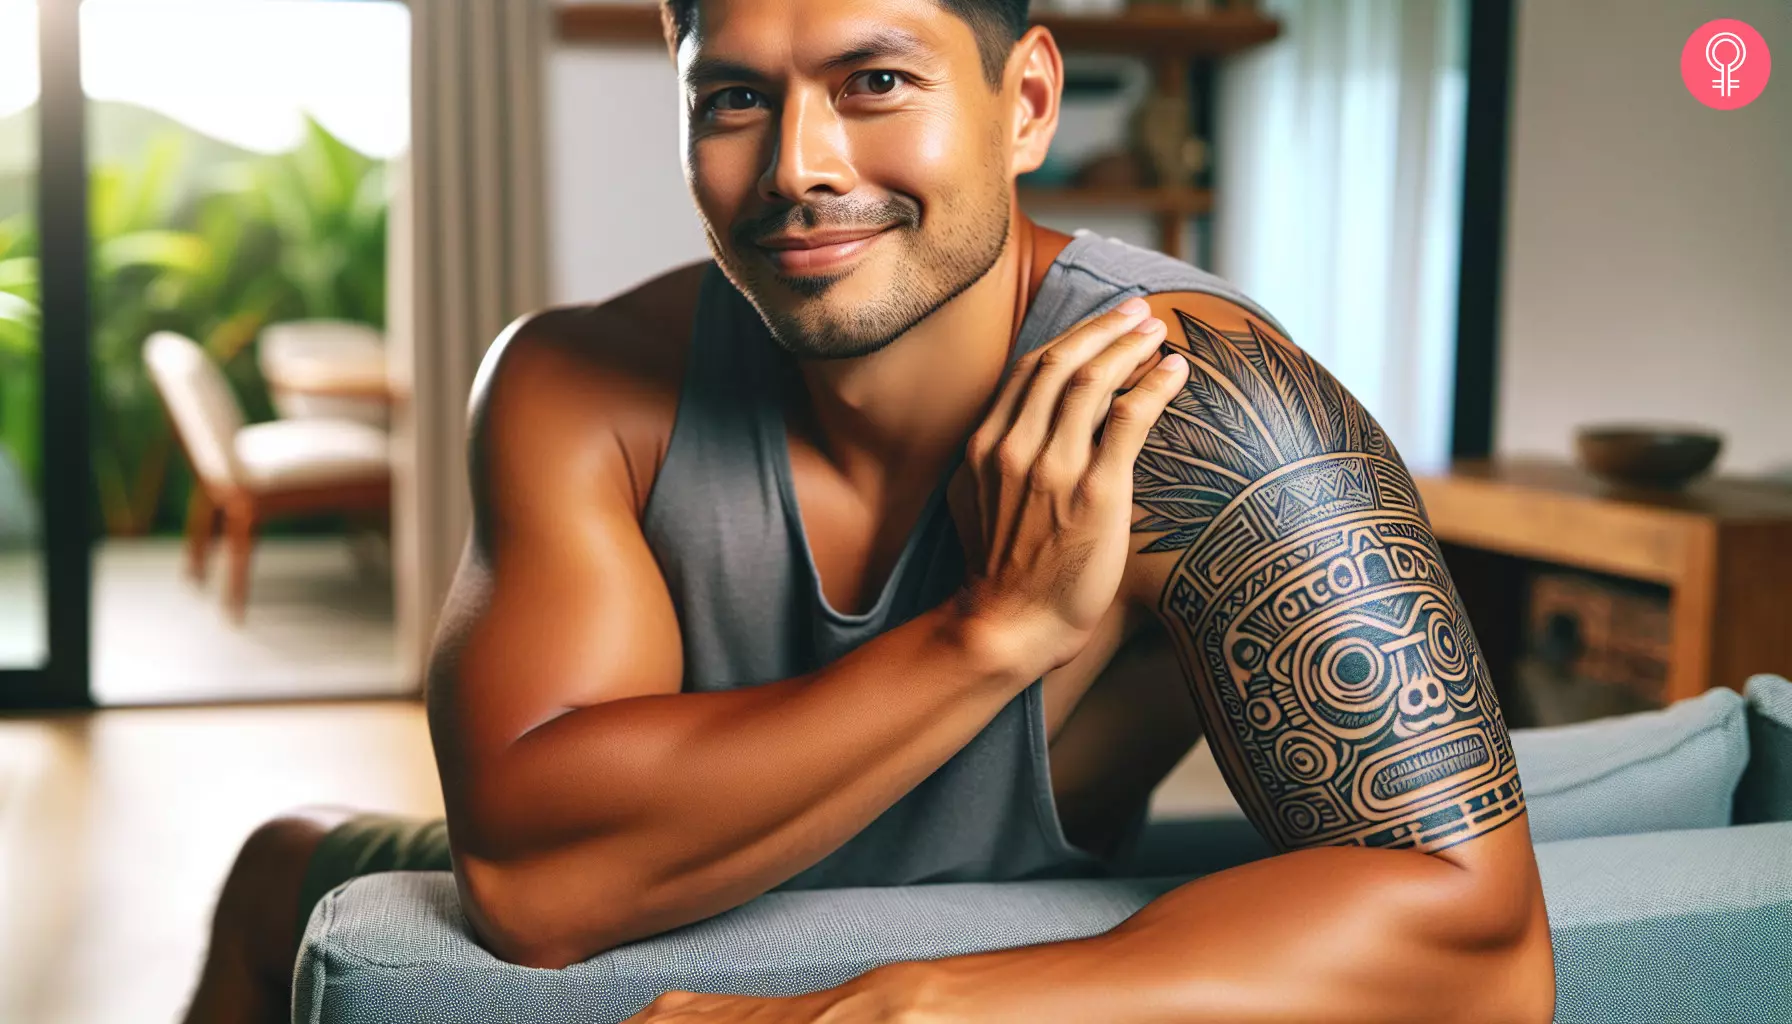 A Polynesia Mayan tattoo on a man’s upper arm